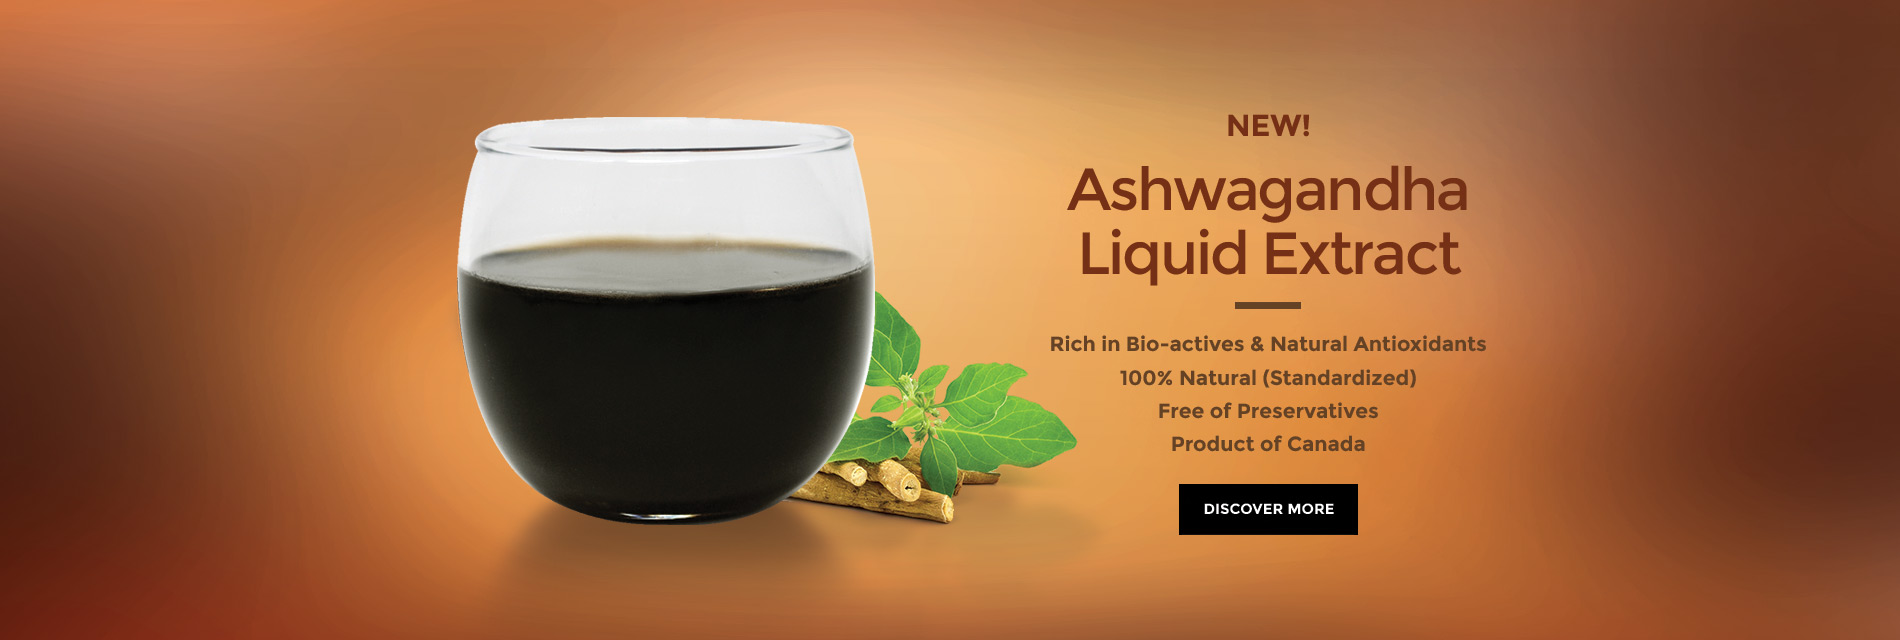 Ashwagandha Liquid Extract - 100% Natural (Standardized)